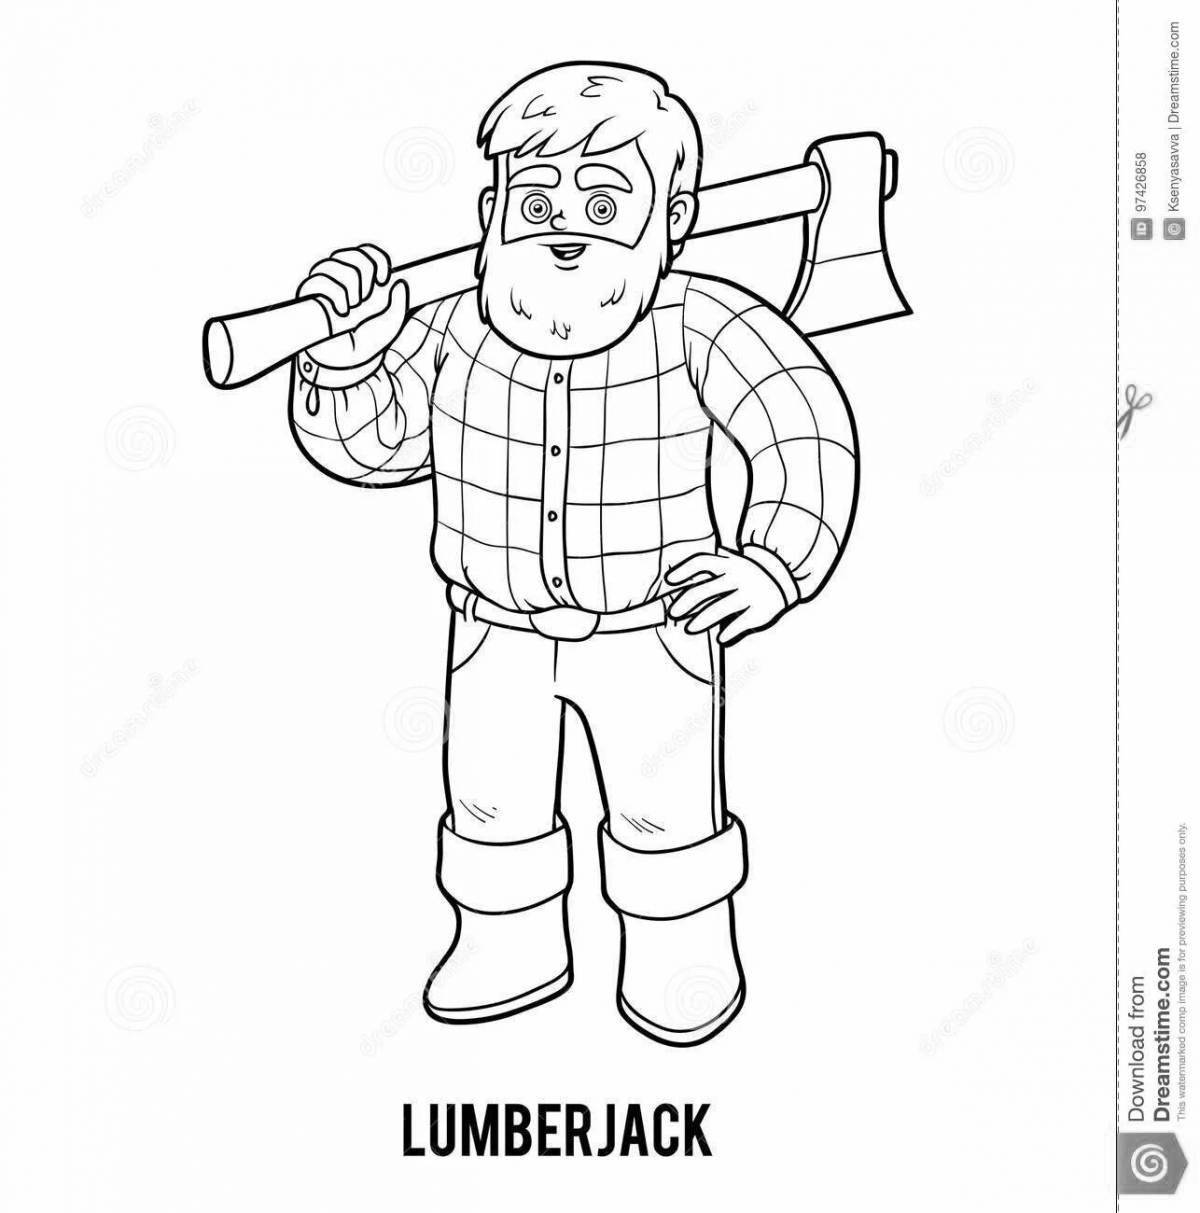 Amazing lumberjack coloring page